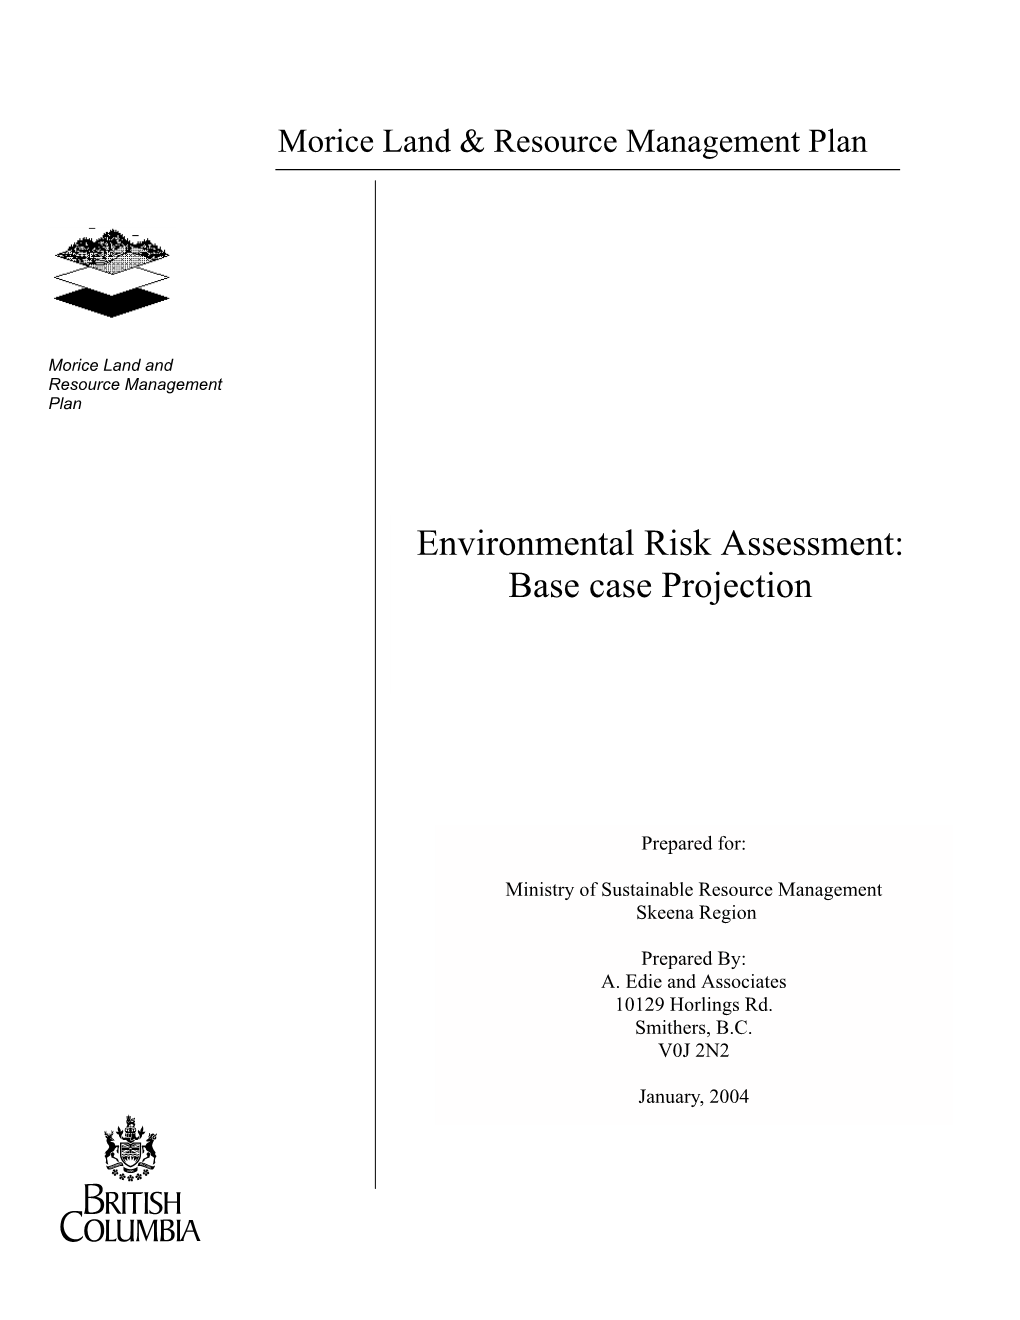 Environmental Risk Assessment: Base Case Projection